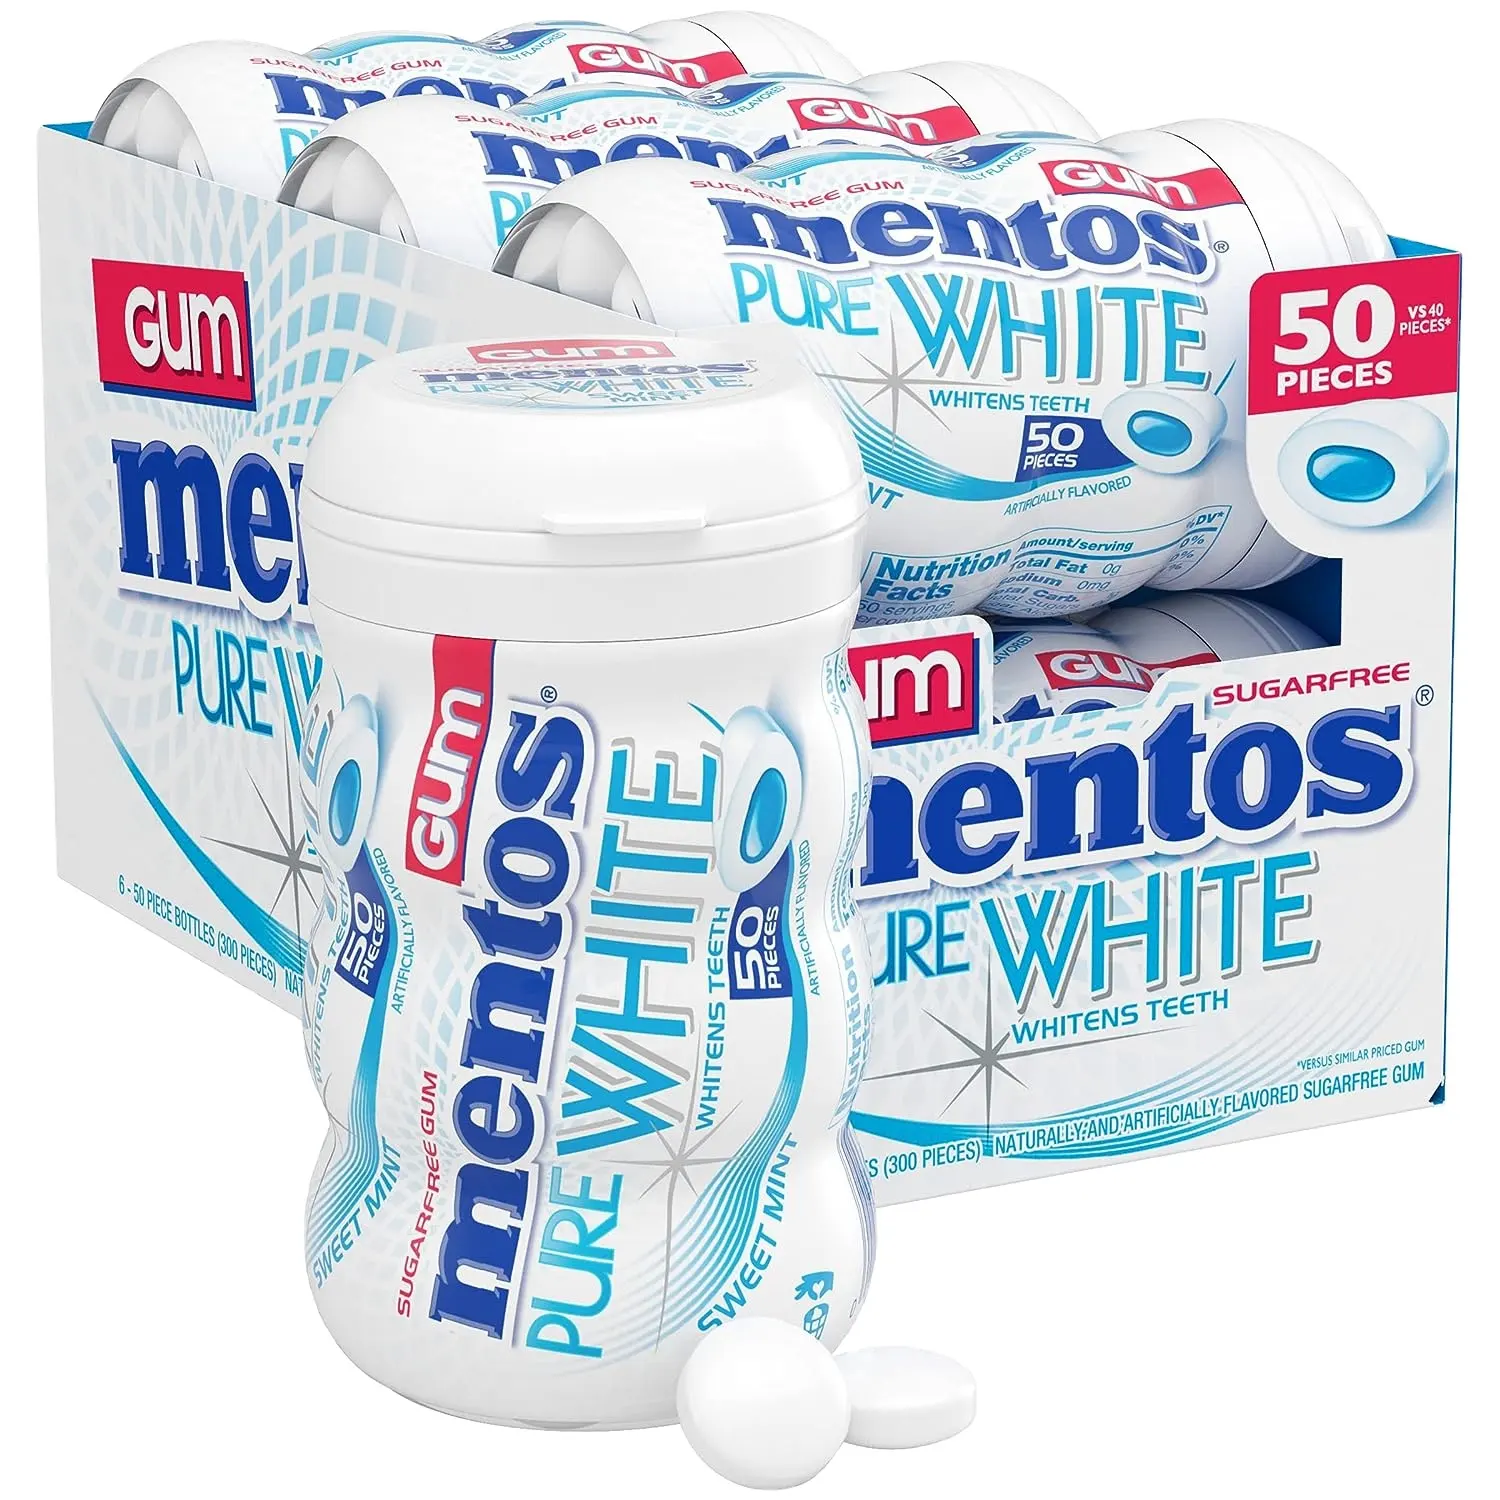 Mento permen karet Mint putih murni bebas gula dengan Xylitol 50 buah botol (Pak 6)